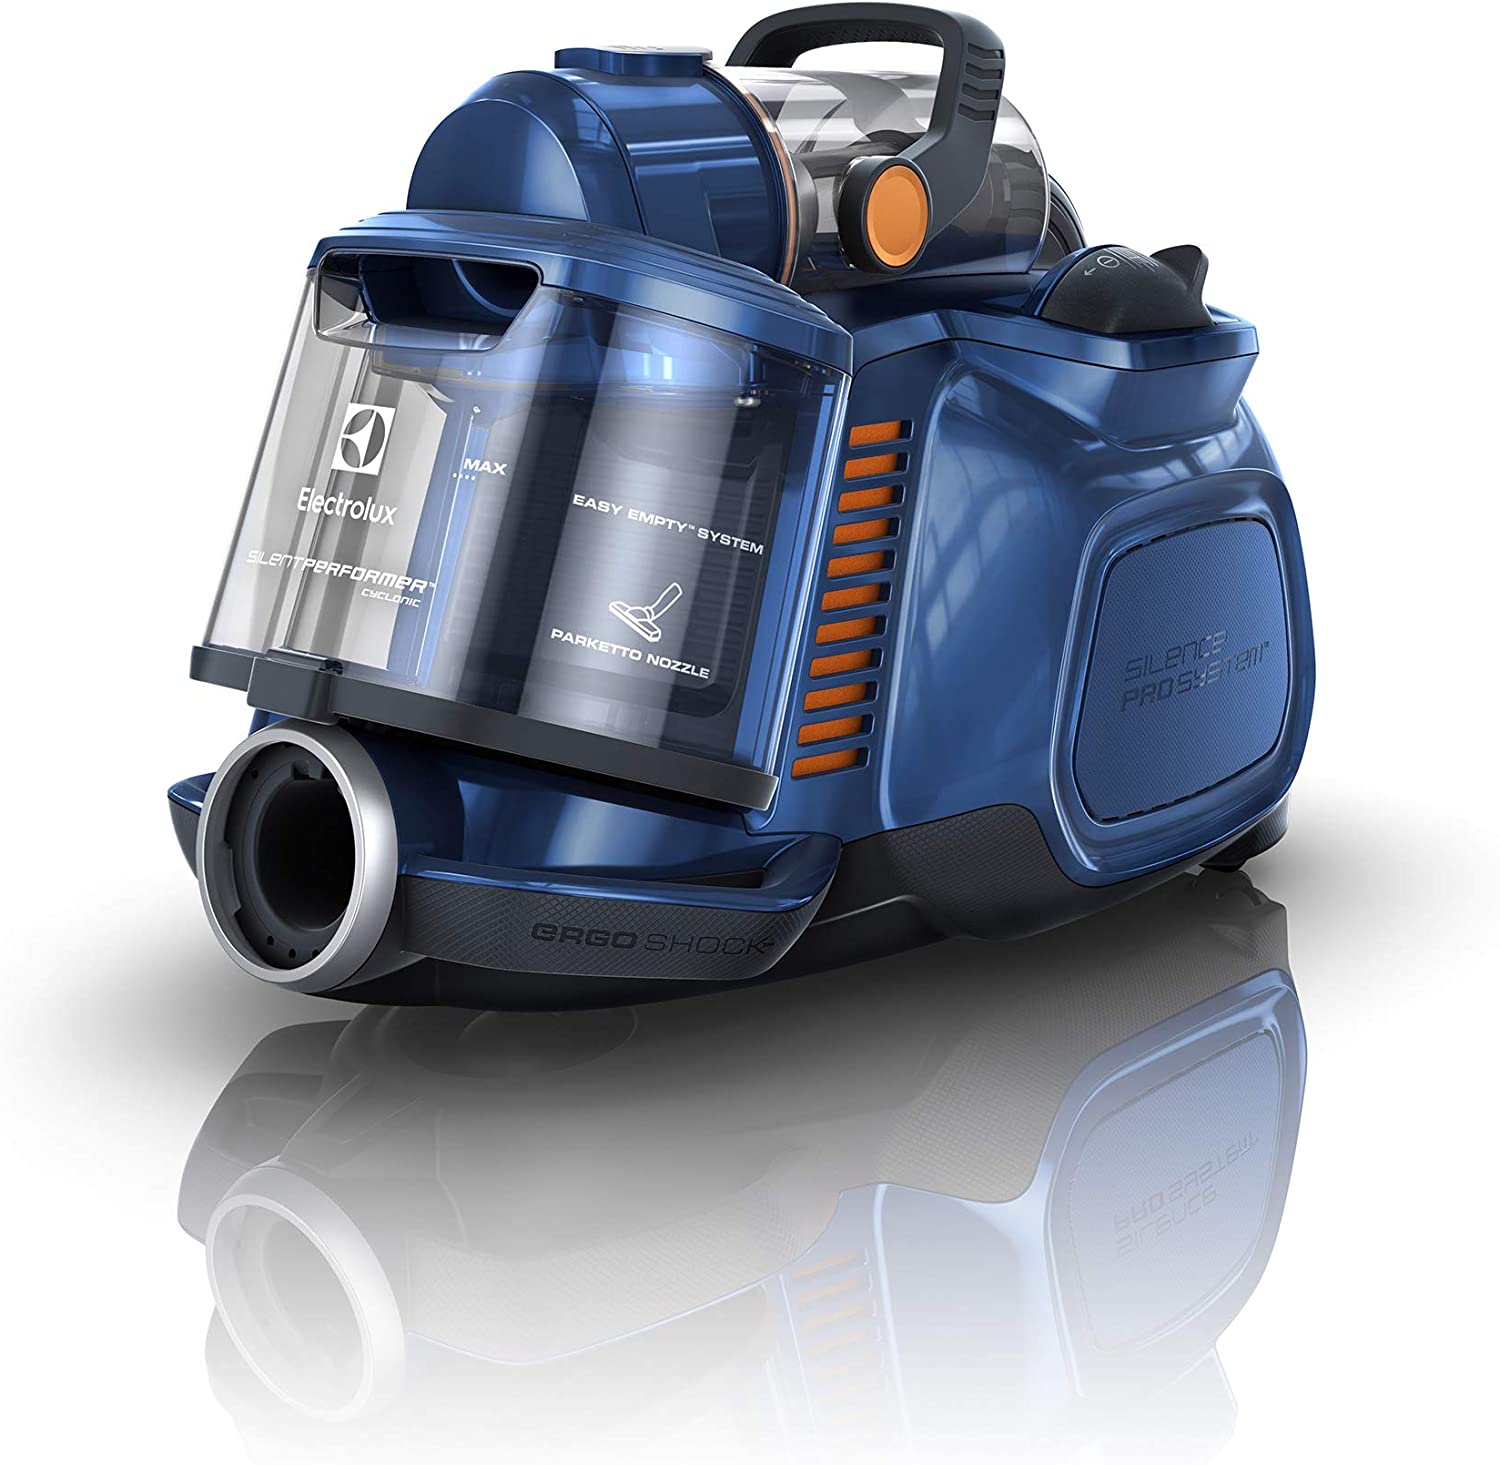 ELECTROLUX Silent Performer Cyclonic Vacuum Cleaner, Blue 2 Liters 2000 Watts مكنسة كهربائية الكترولوكس